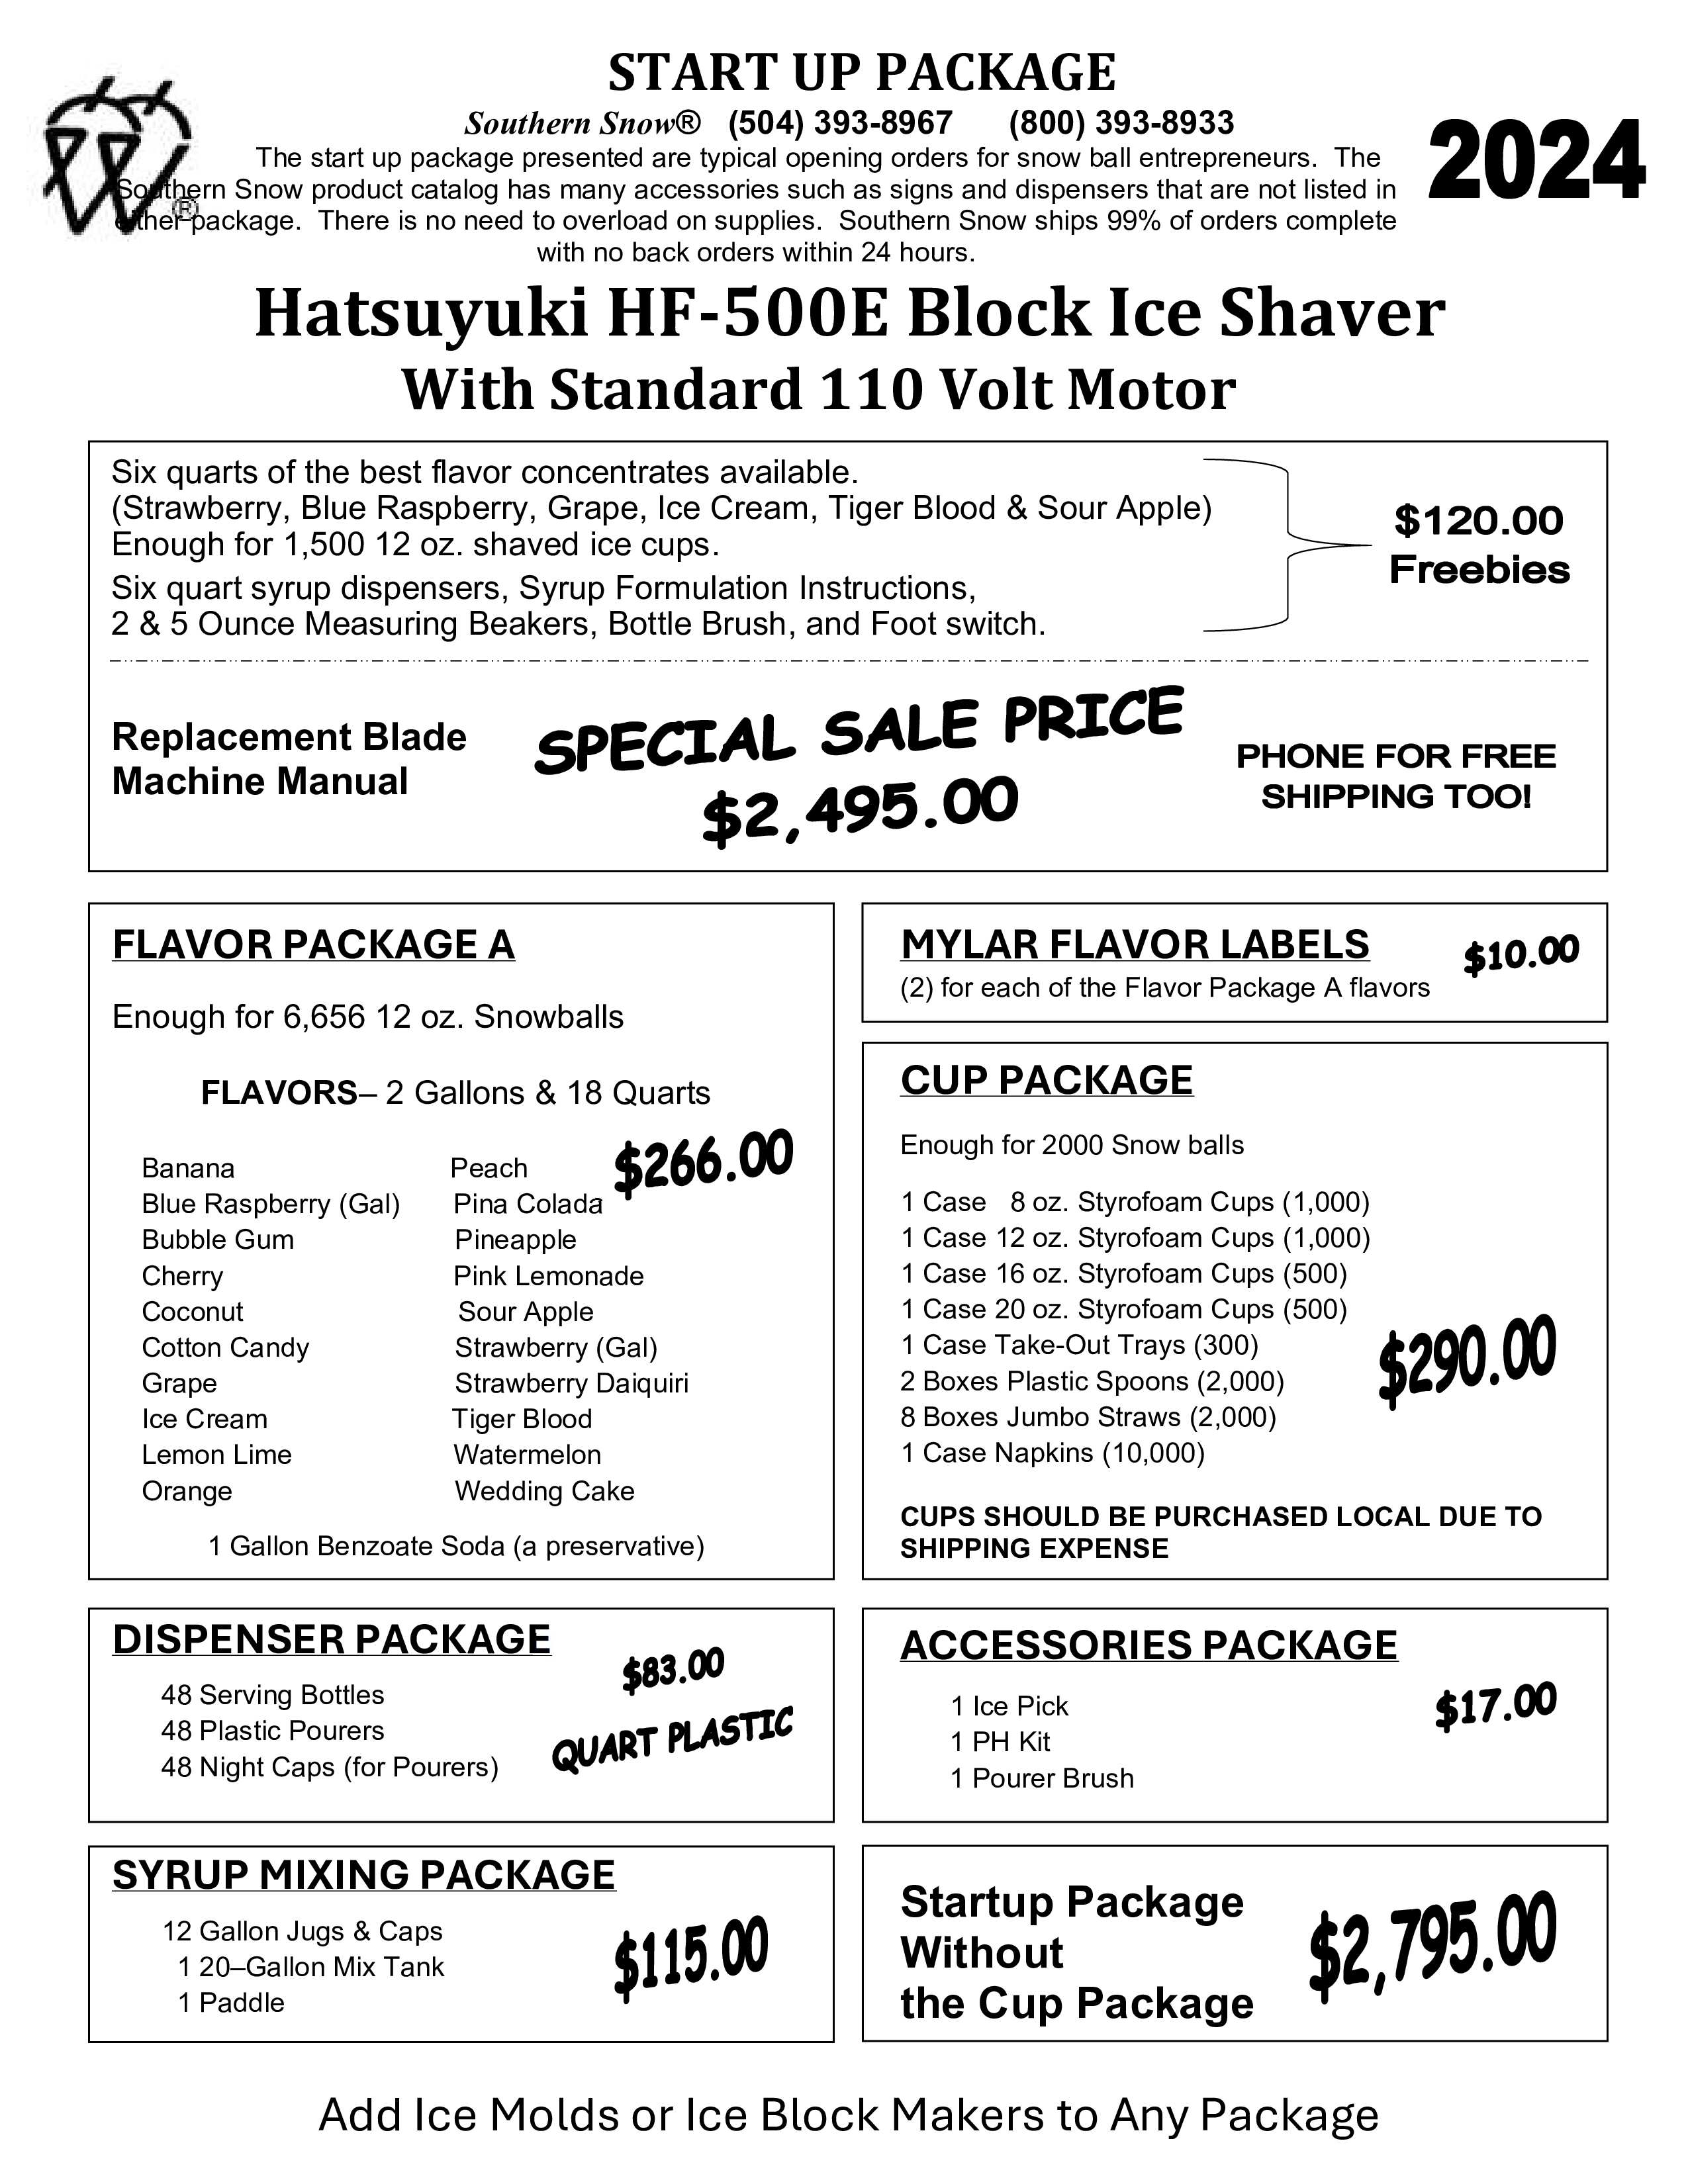 Hatsuyuki HF-500E Block Ice Shaver Start Up